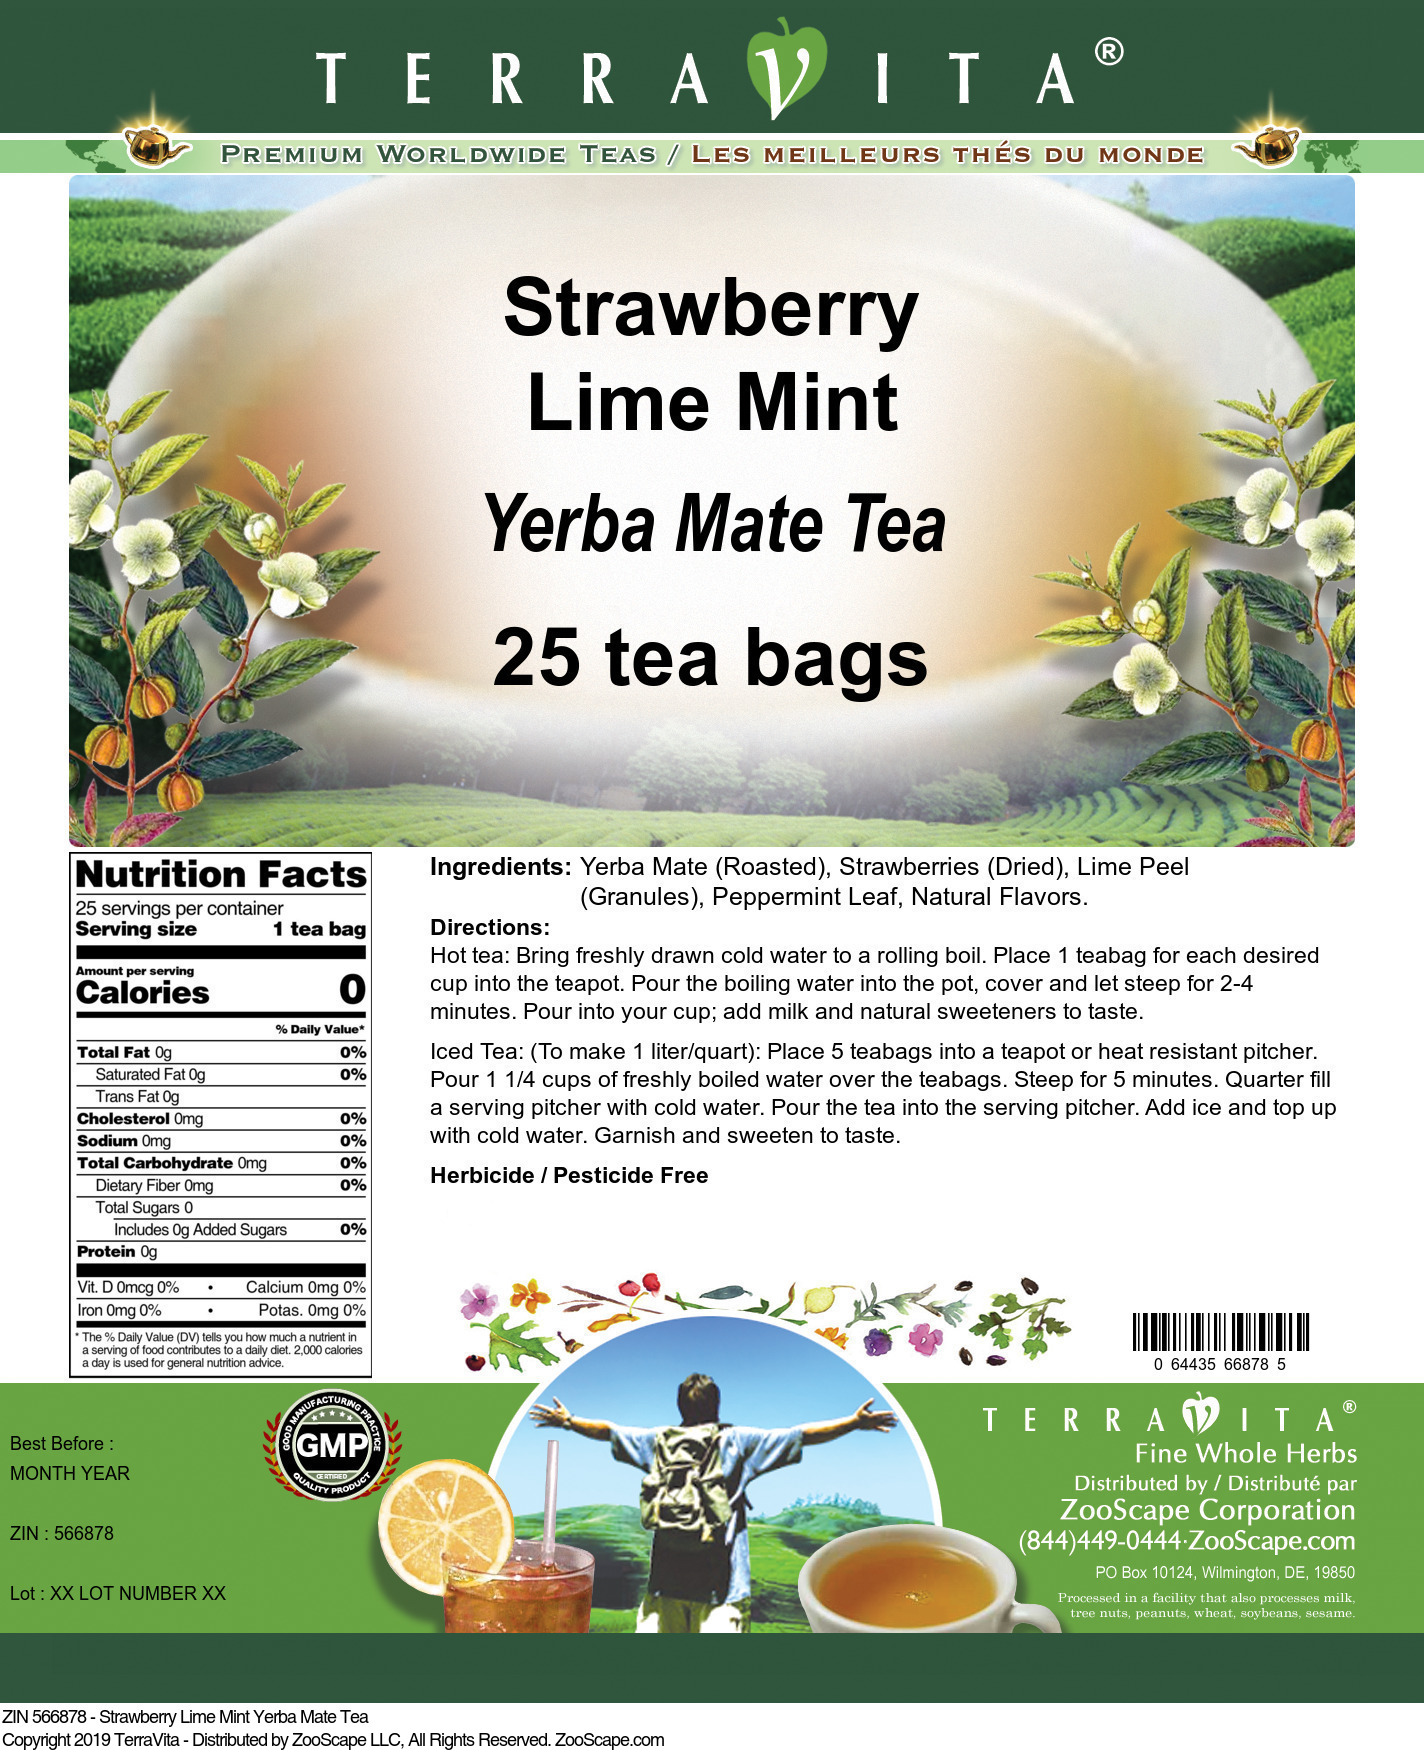 Strawberry Lime Mint Yerba Mate Tea - Label